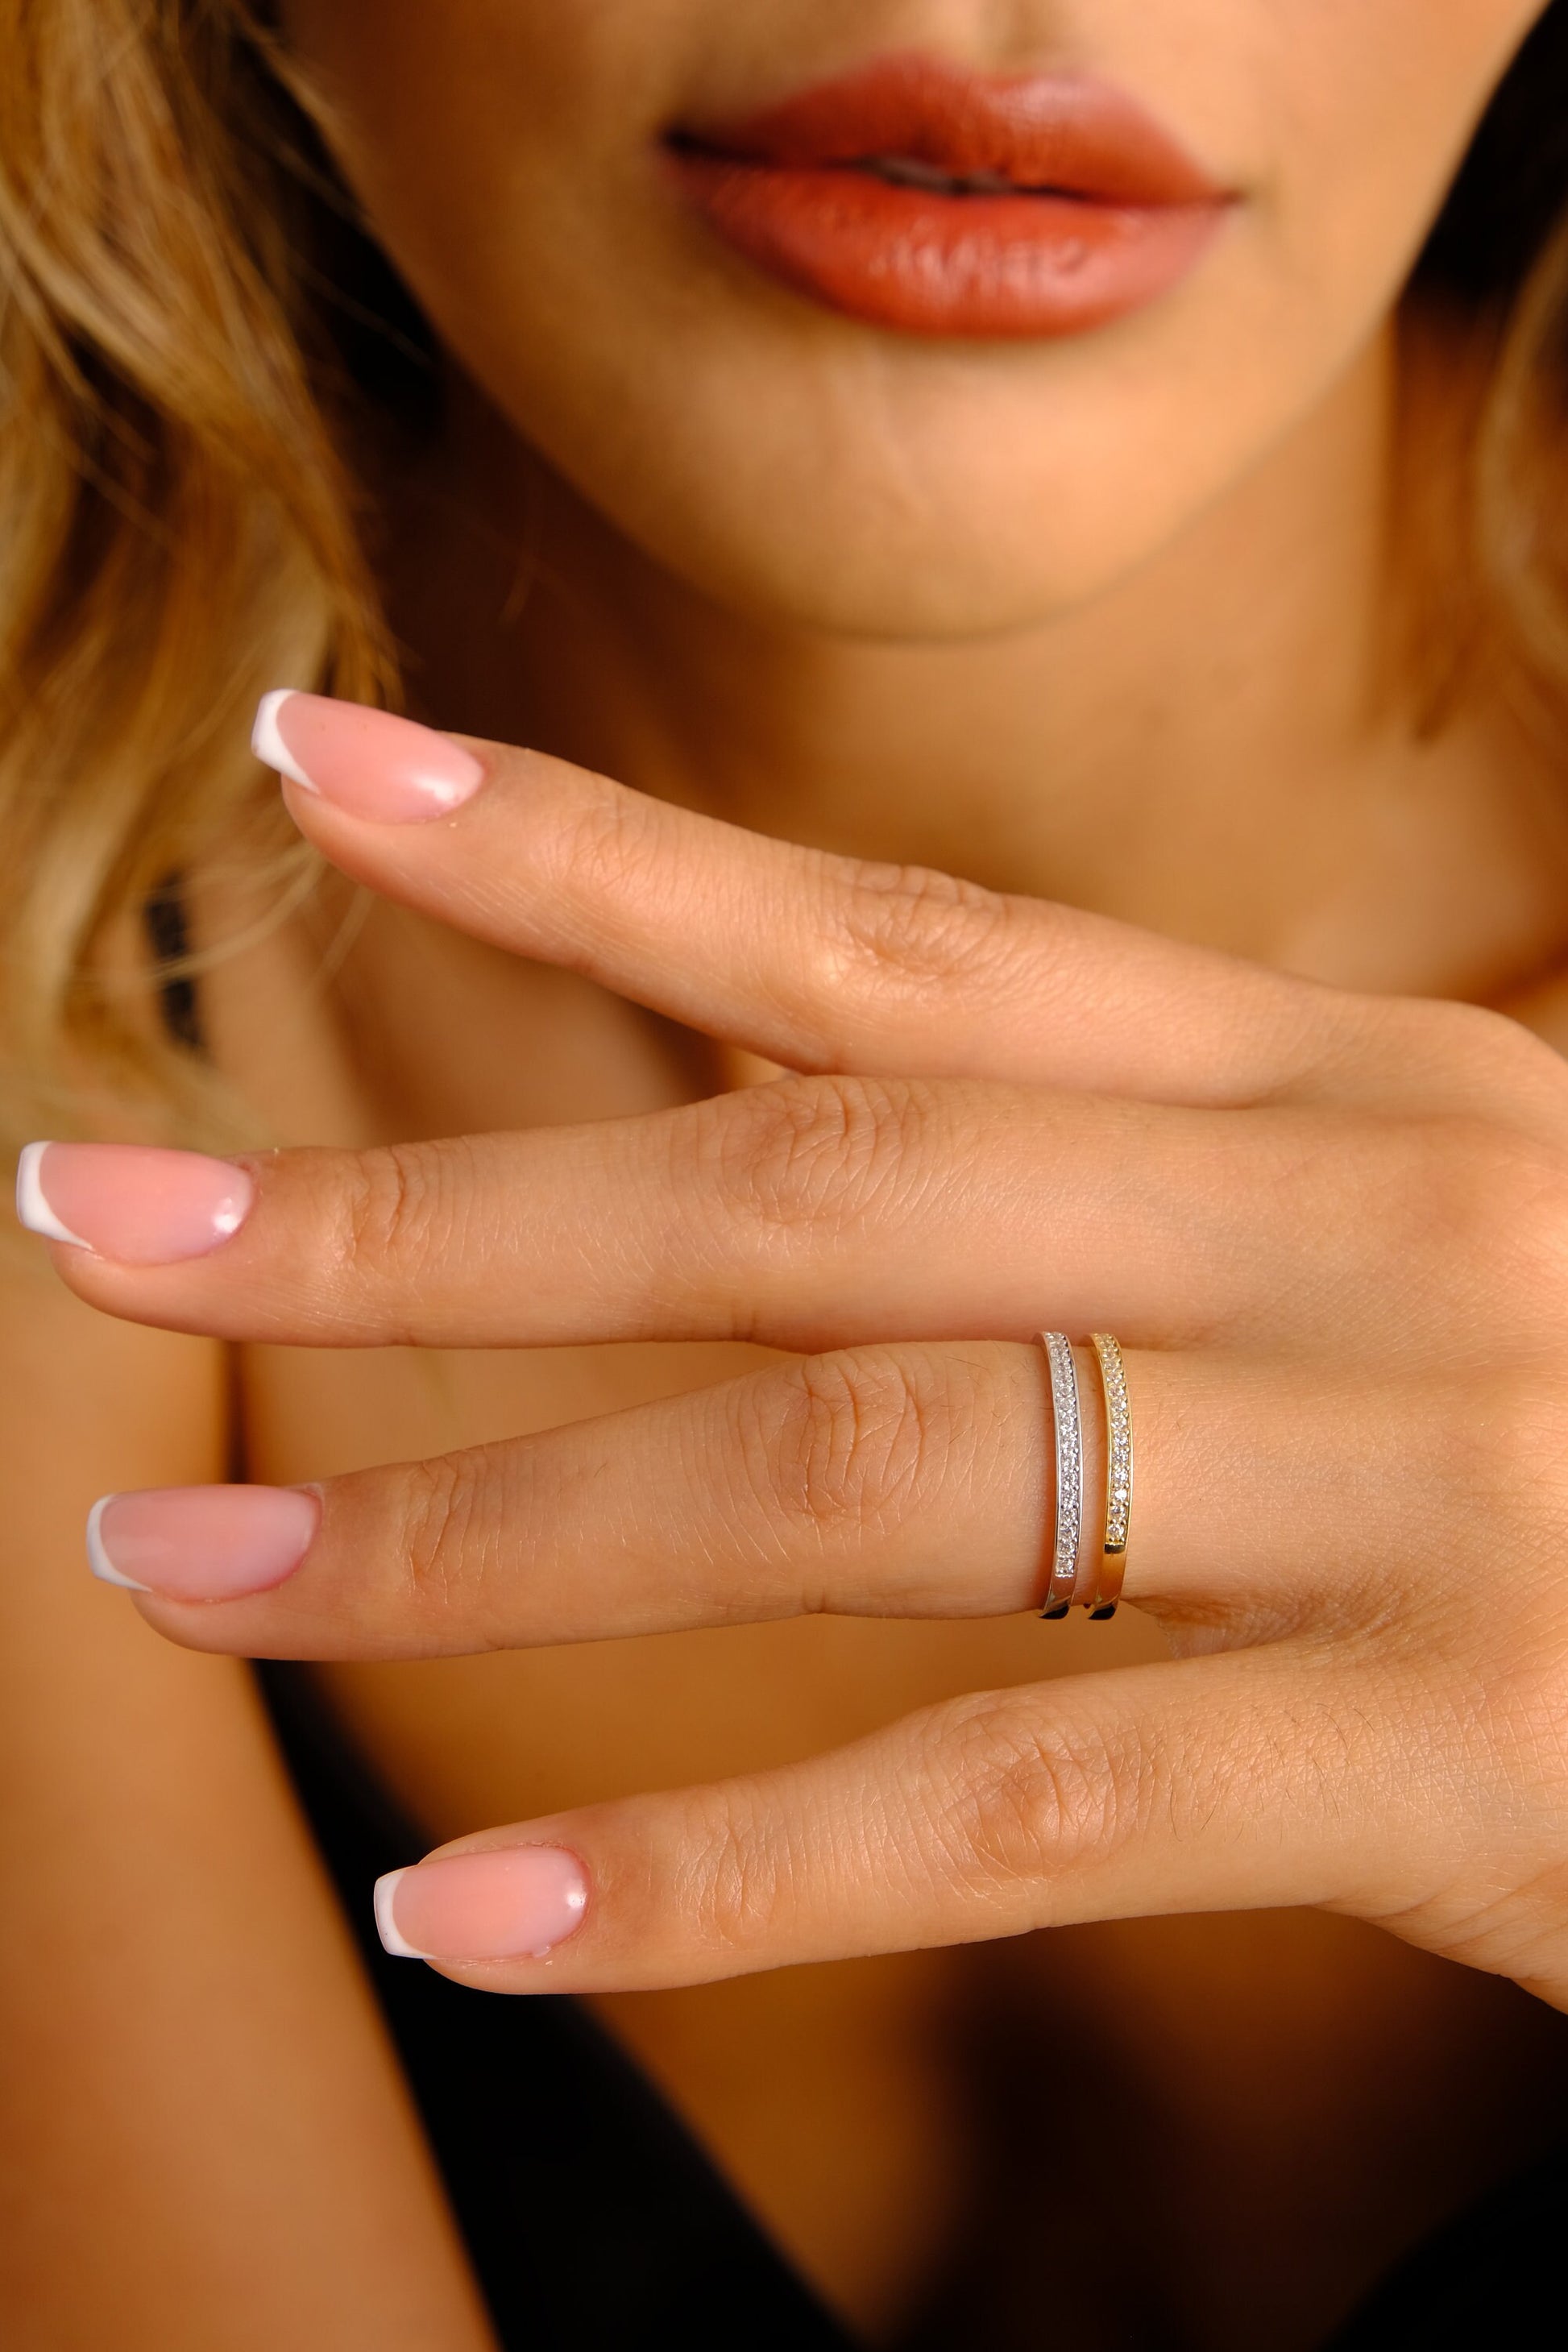 14K Gold Half Eternity Ring, Minimalist Wedding Band Ring, Thin Half Infinity Ring, 1.50MM Dainty Stacking Ring, Gold Thumb Band Ring